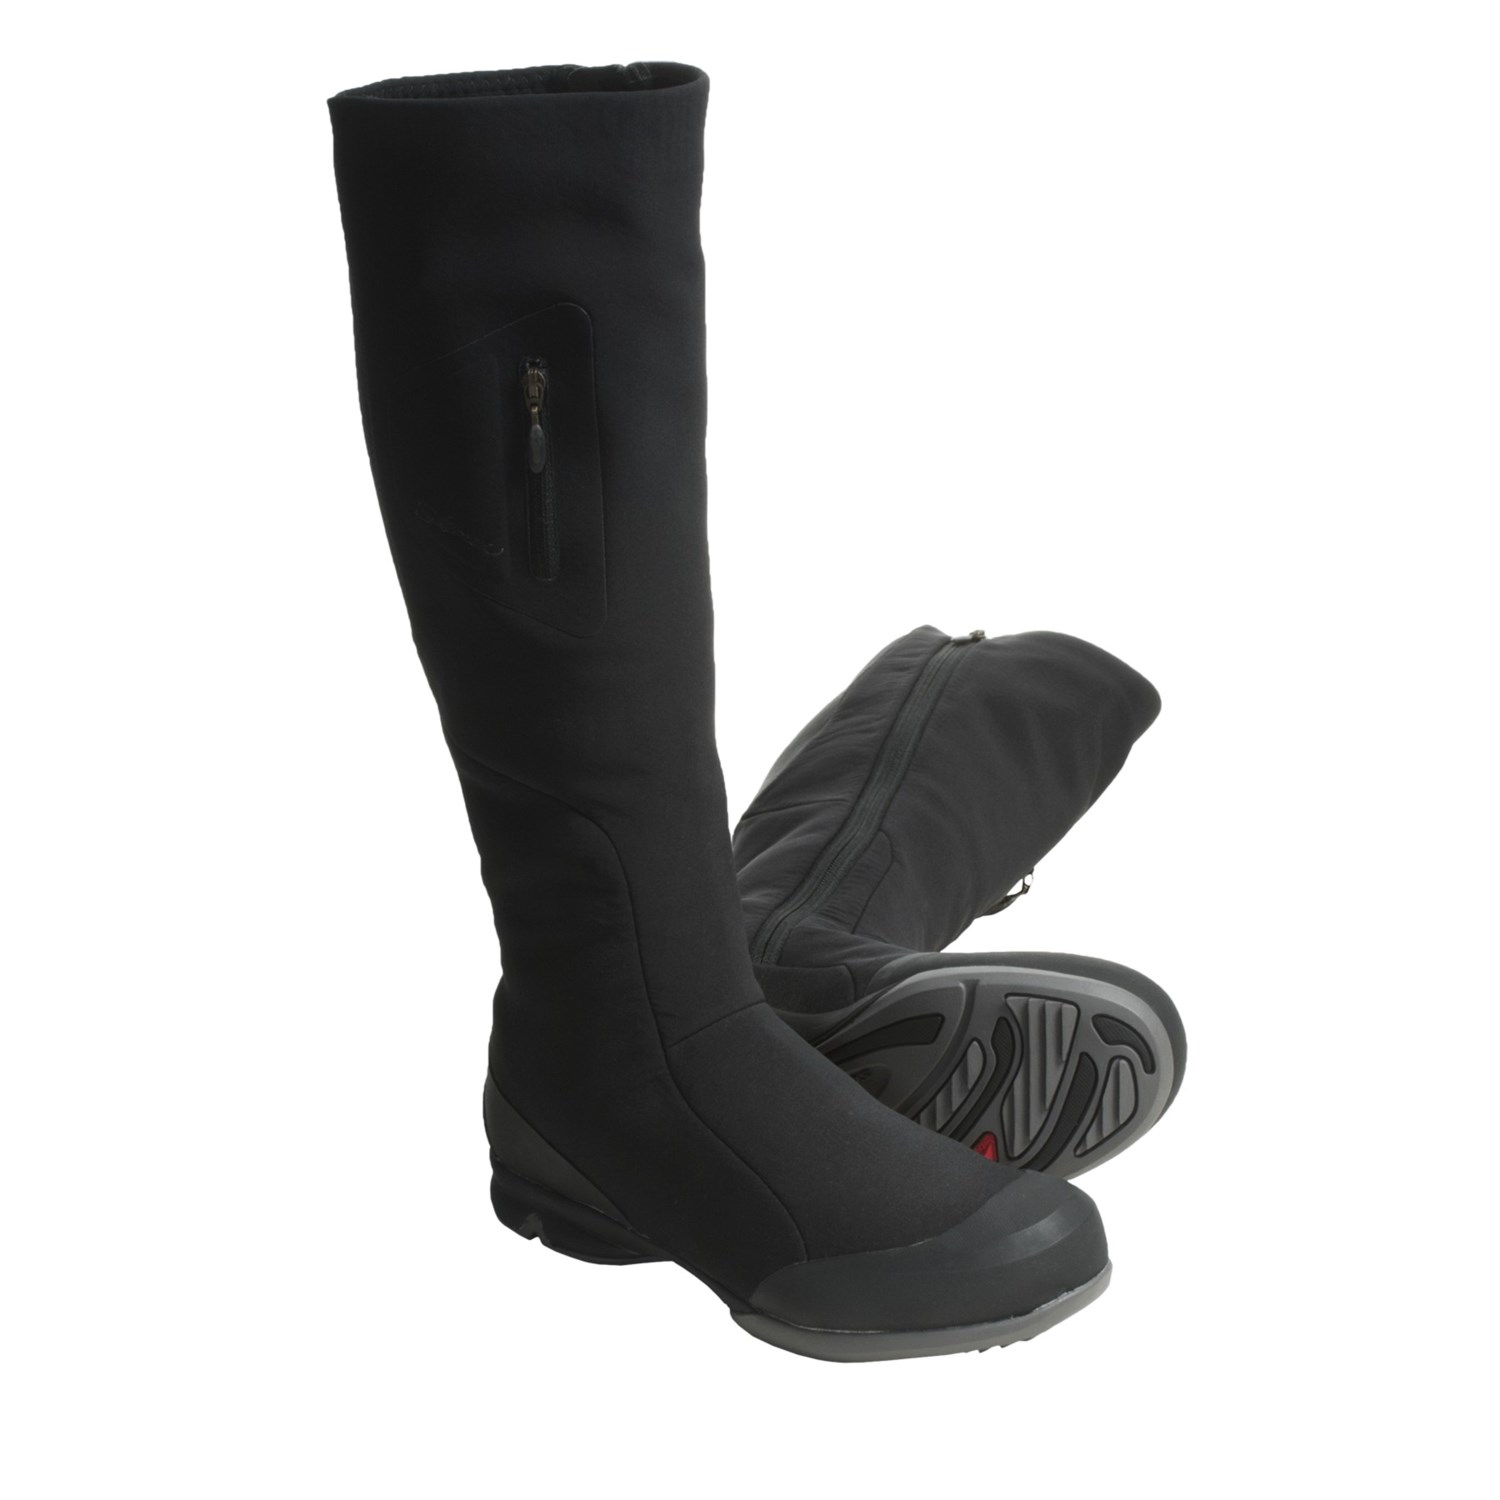 Salomon Uma II Winter Boots (For Women) 4196P - Save 50%